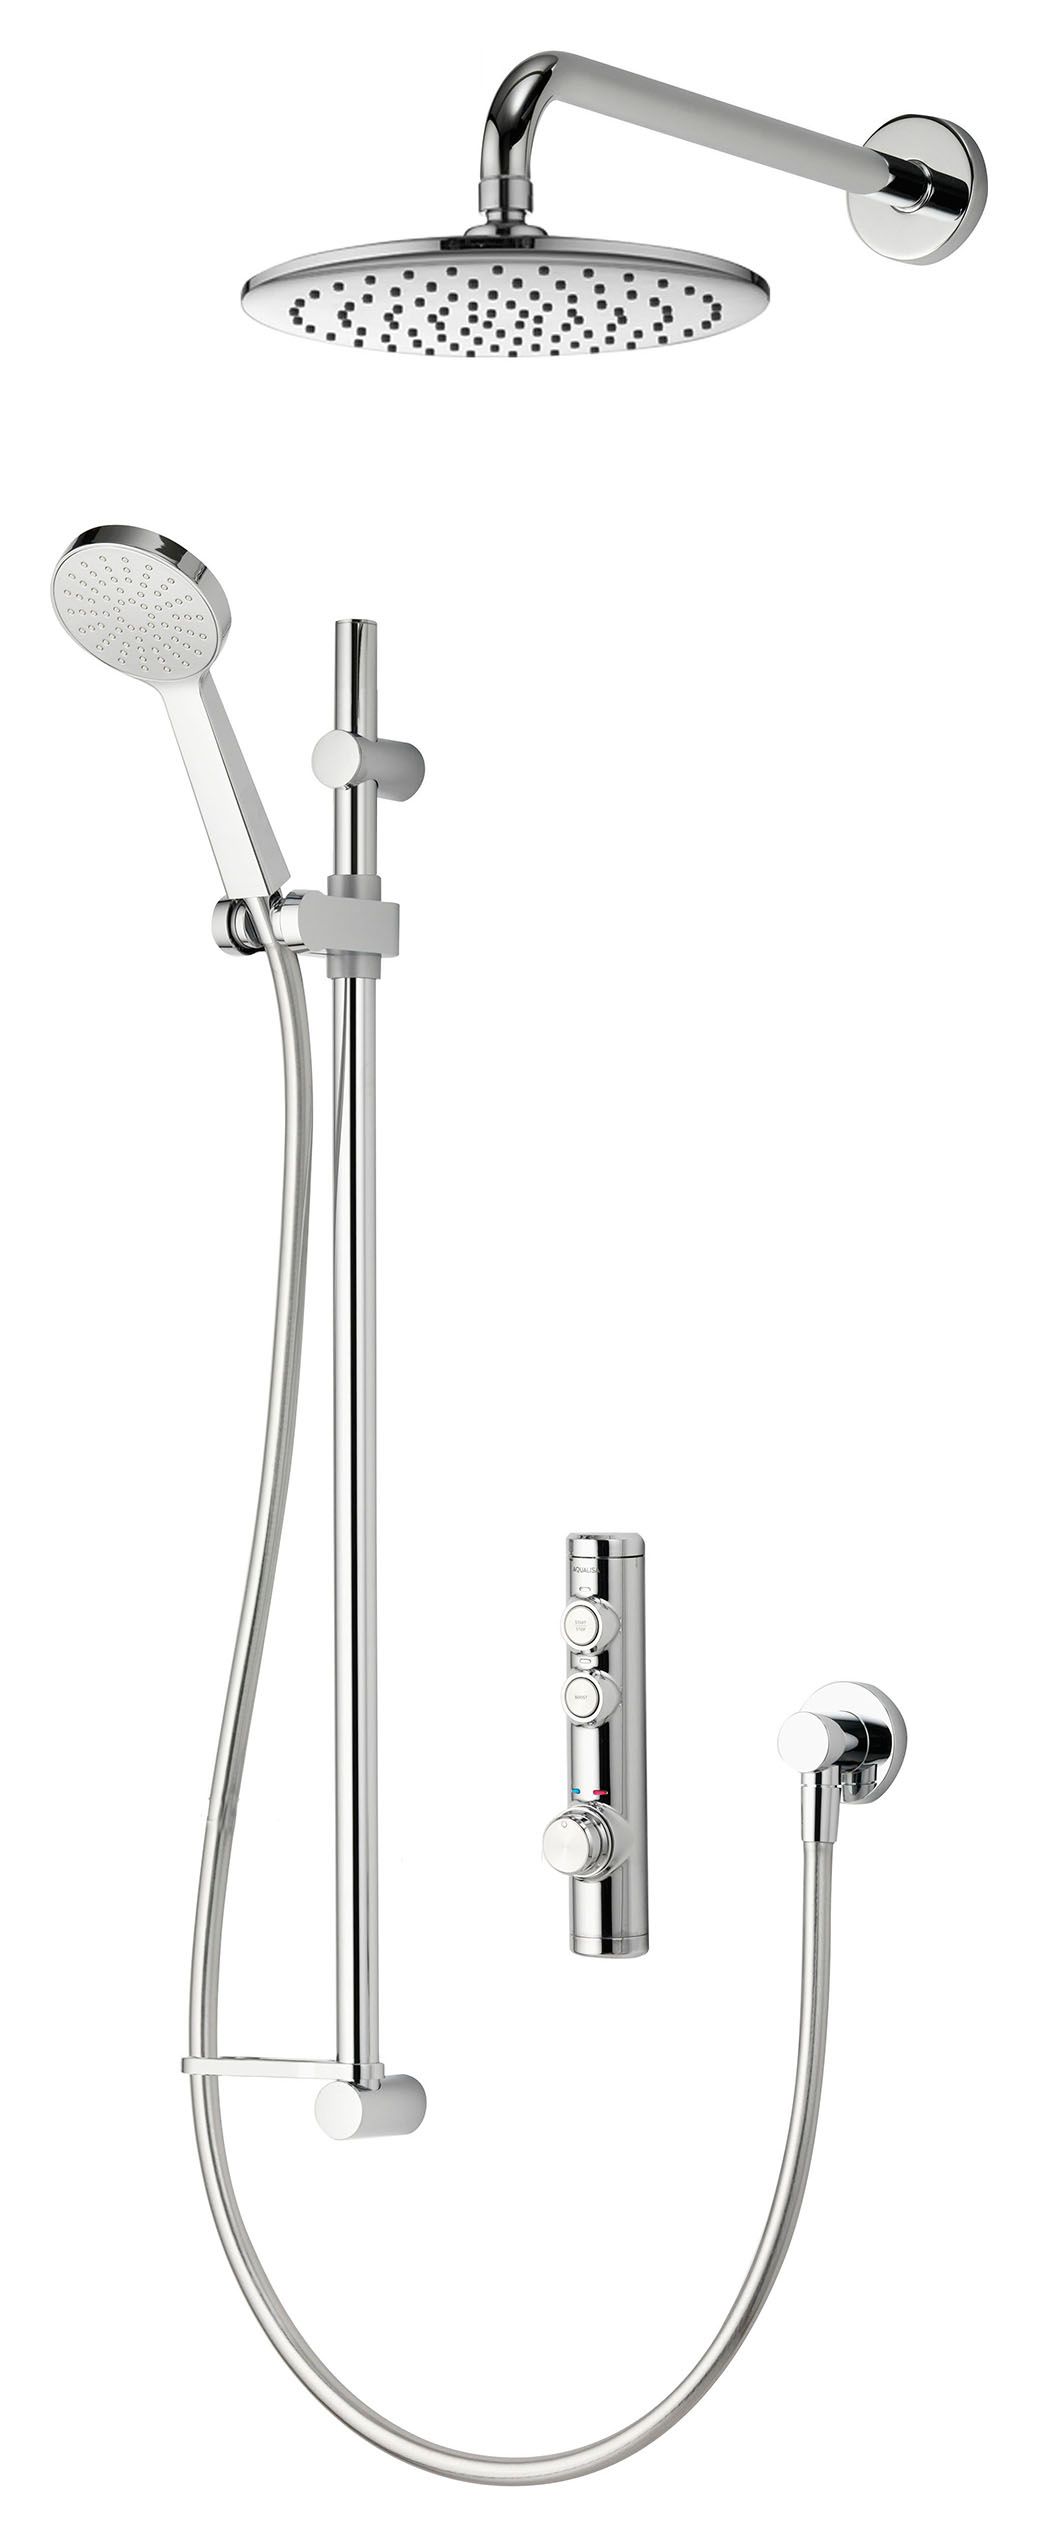 Aqualisa iSystem High Pressure Digital Concealed Shower Divert with Adjustable Wall Shower Head - Combi